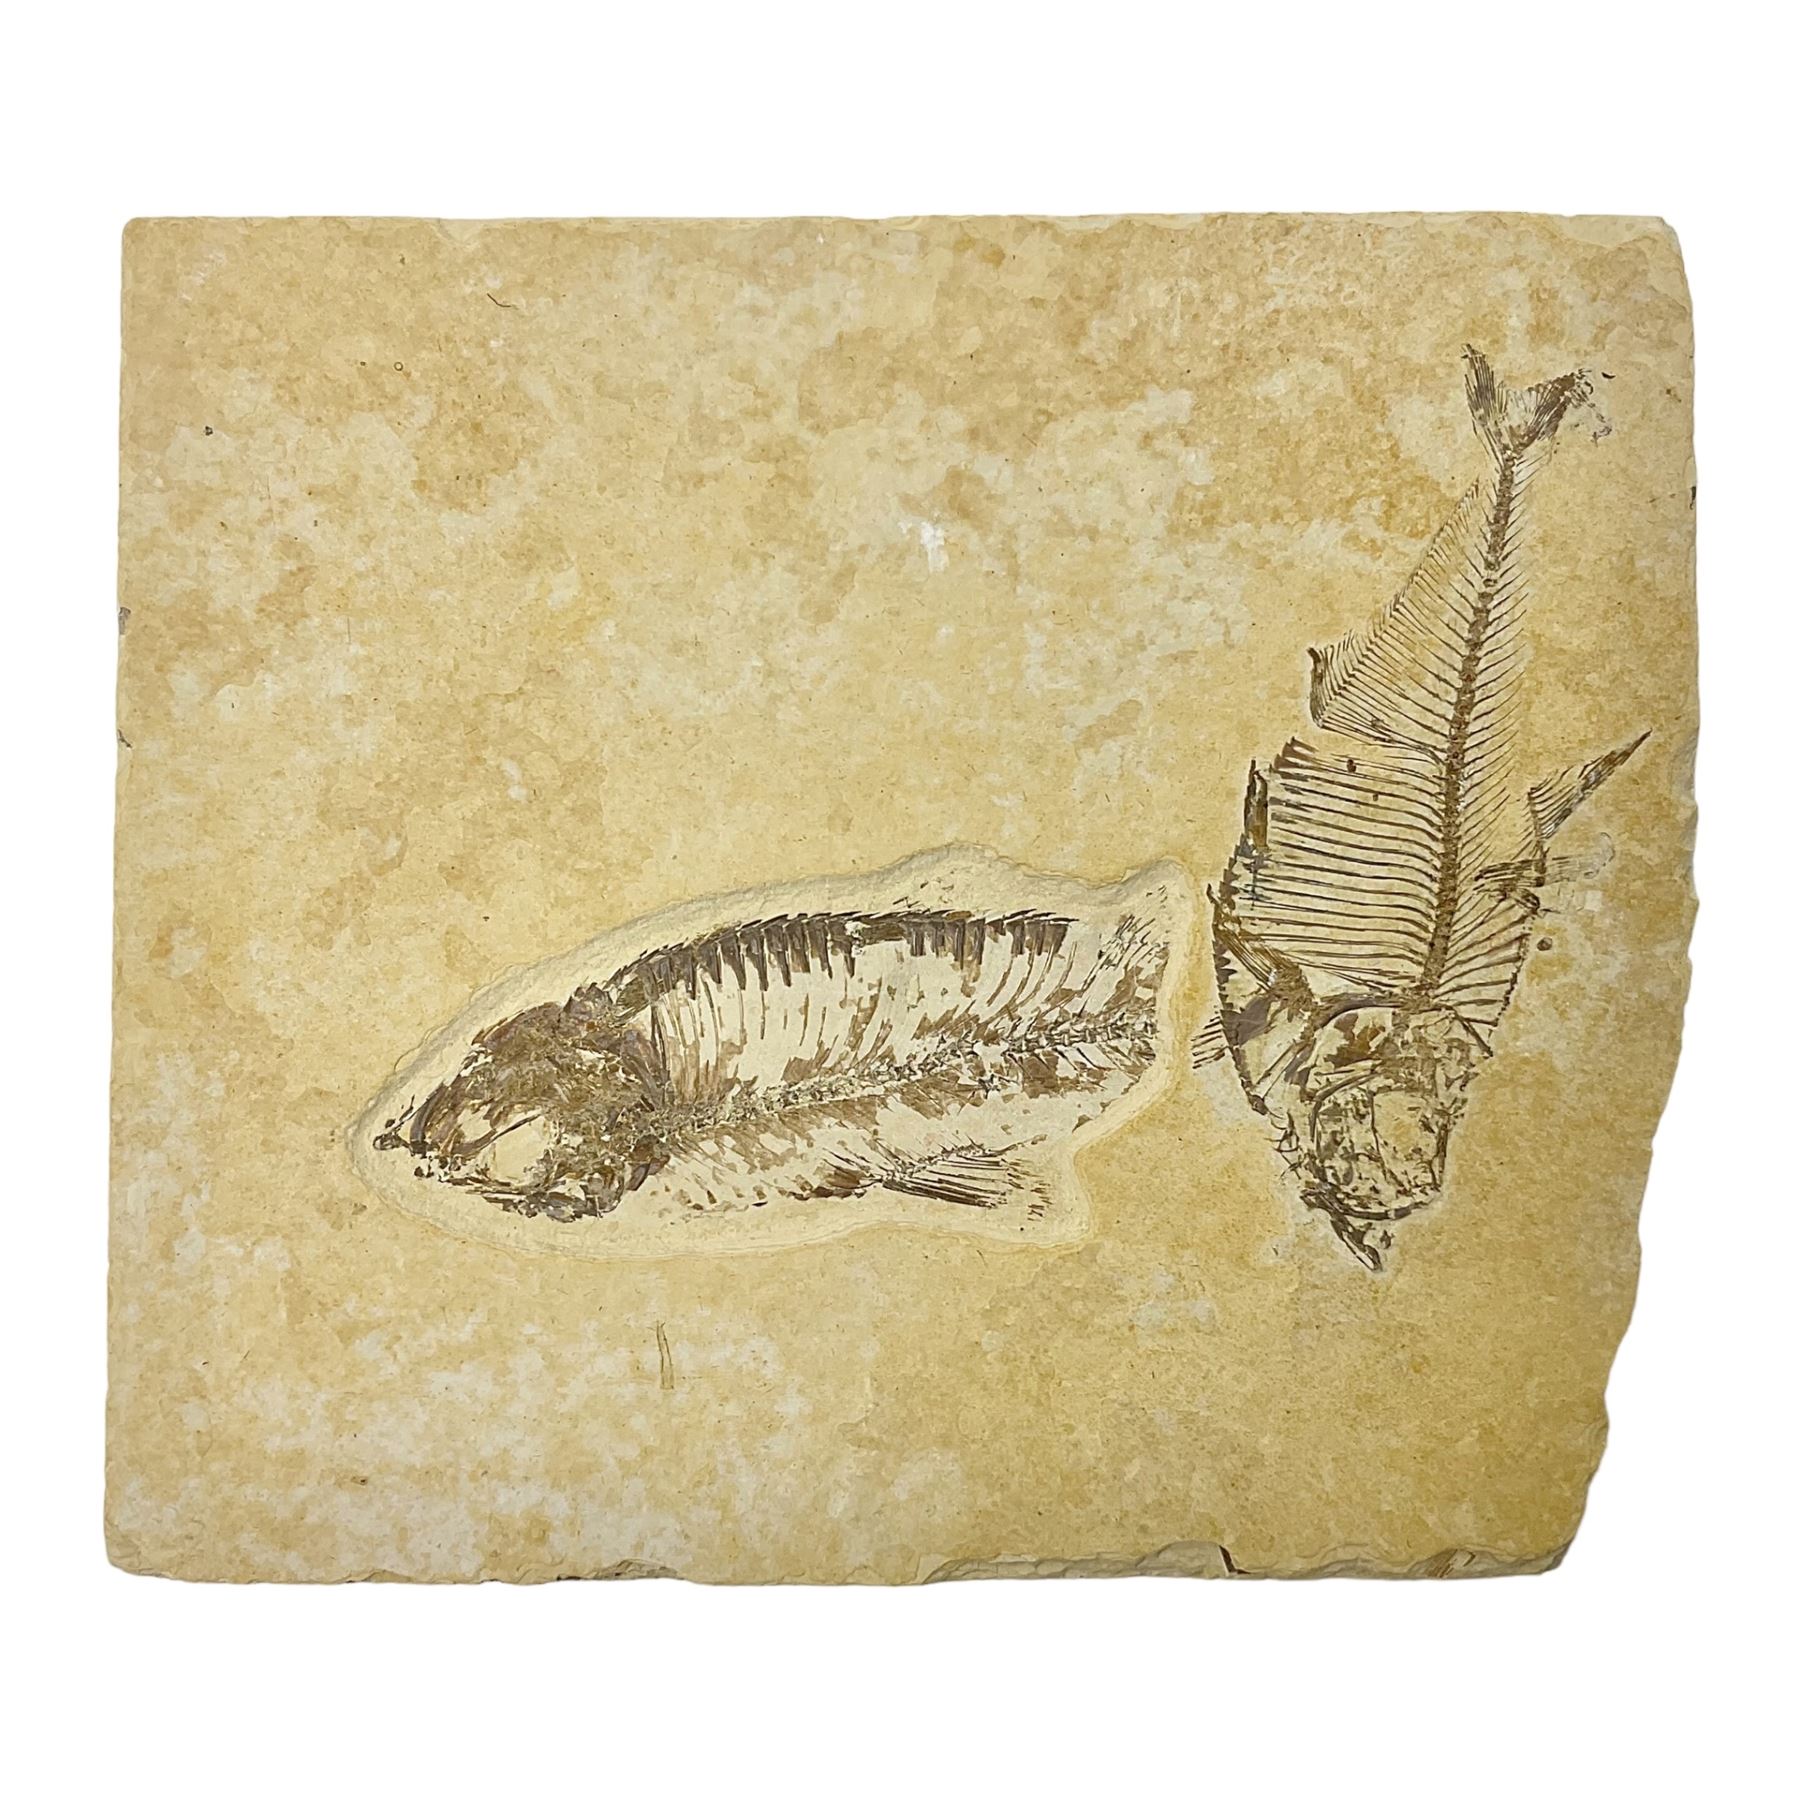 Two fossilised fish (Knightia alta) in a single matrix